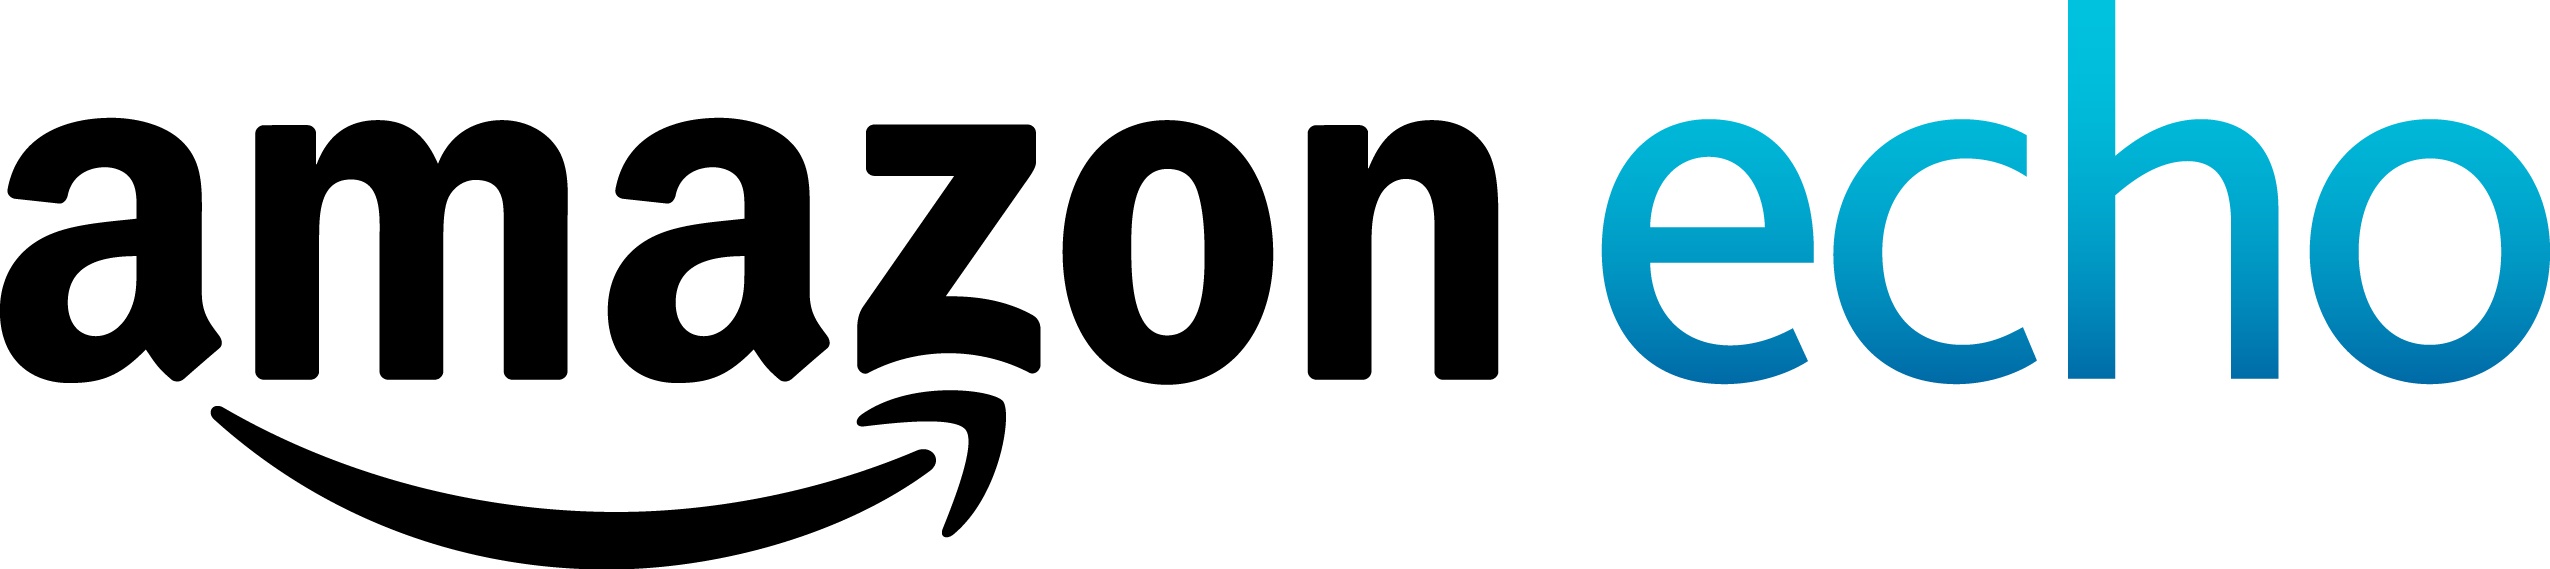 Amazon Badges Vector PNG - 115860